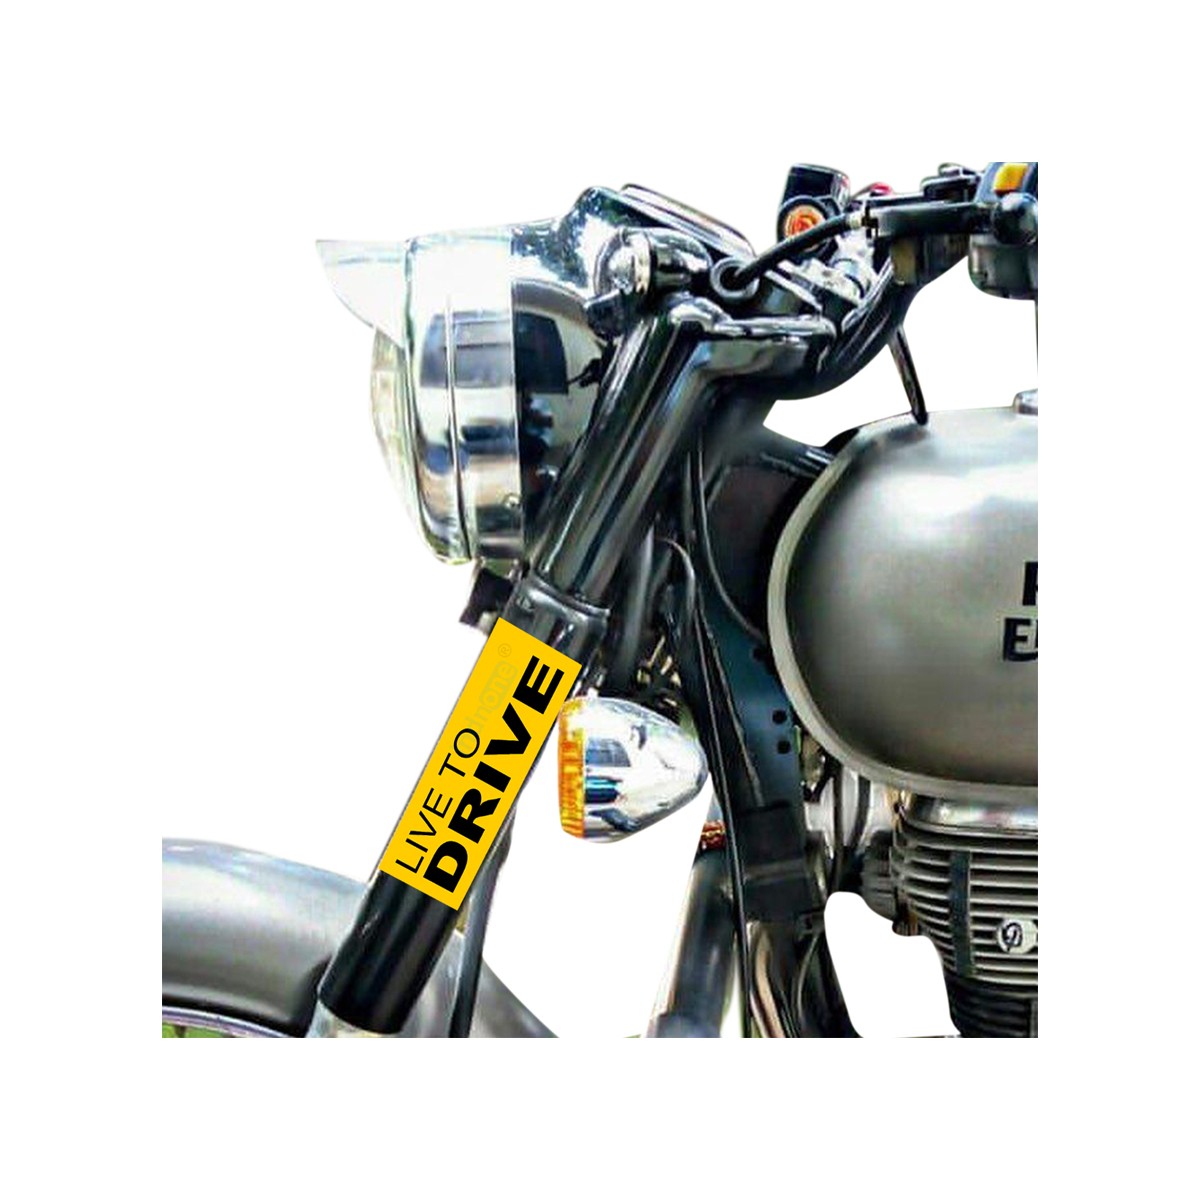 indnone® Live to Drive Logo Sticker for Bike| Sticker Stylish Vinyl Decal Sticker | Standard Size Windows Side Hood Bumper